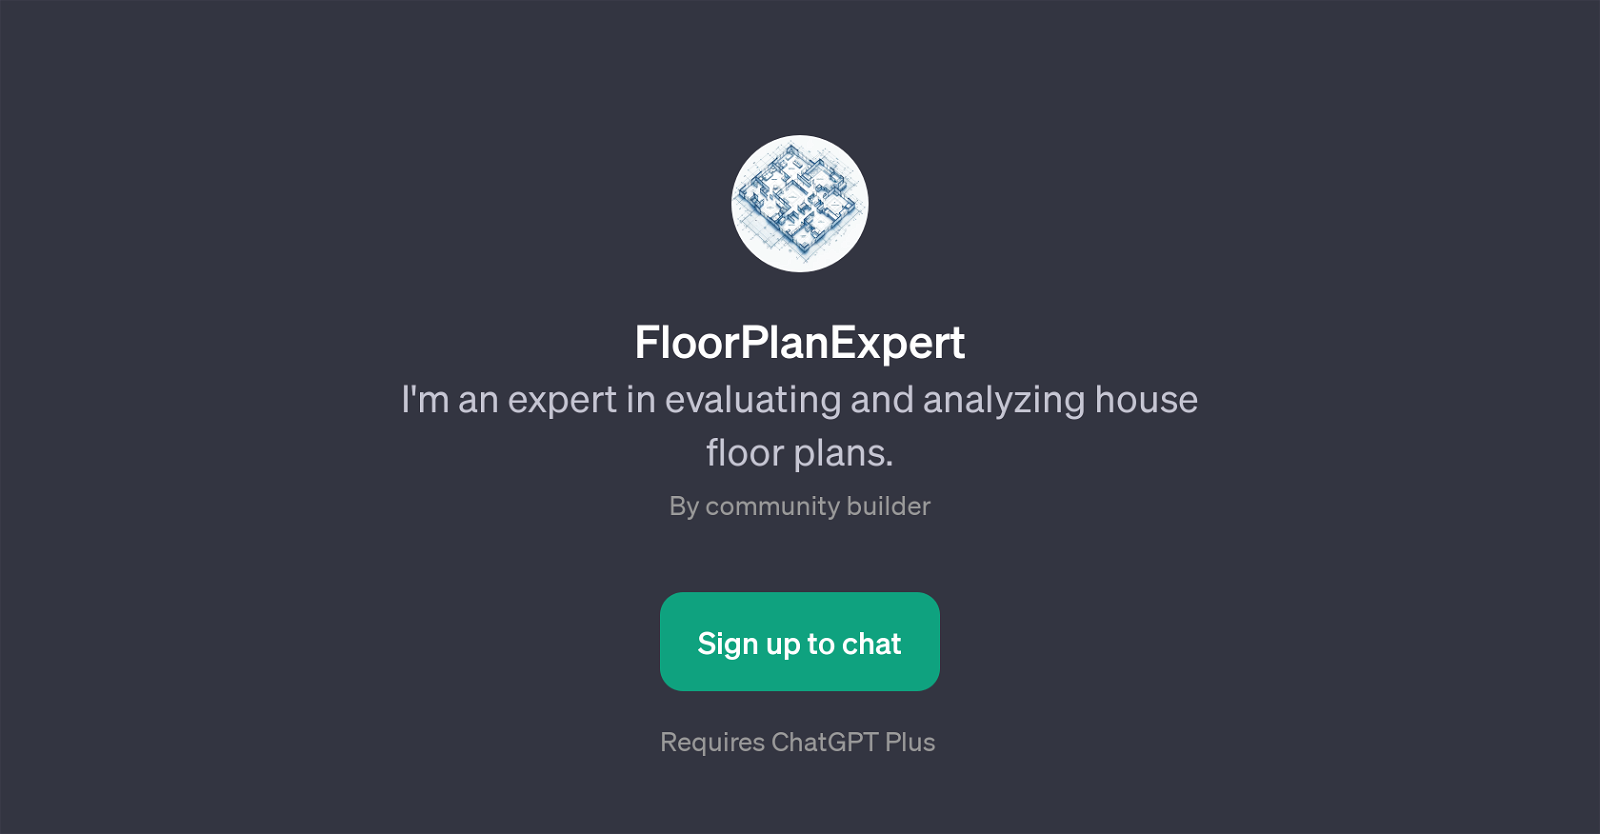 FloorPlanExpert website